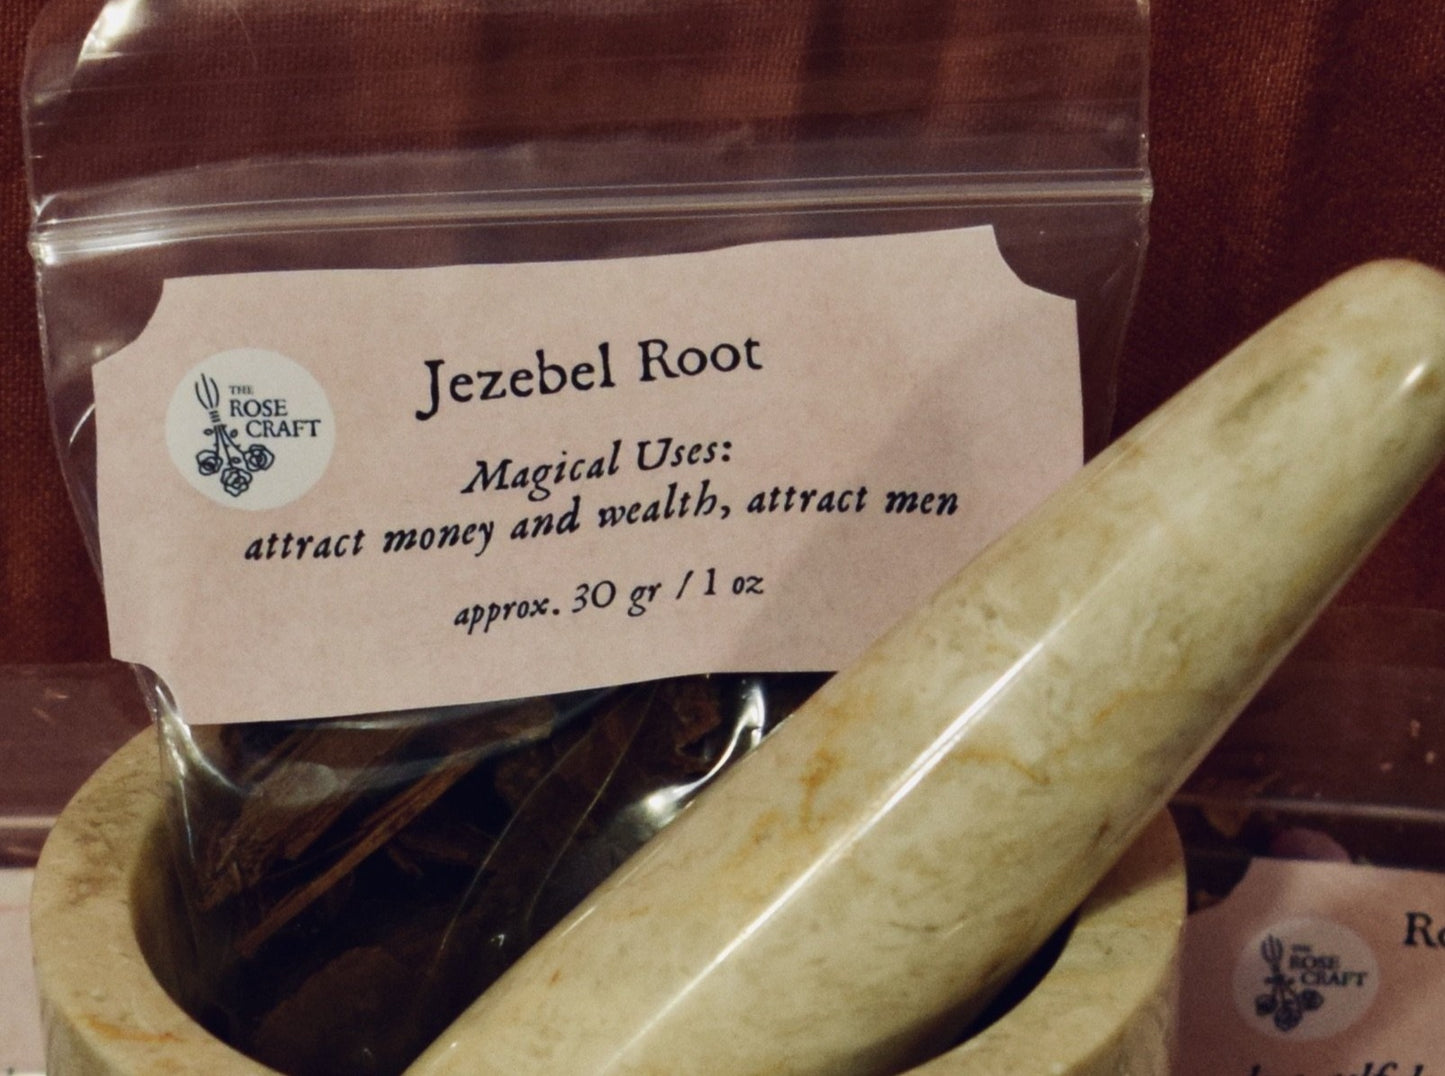 Jezebel Root for Attraction